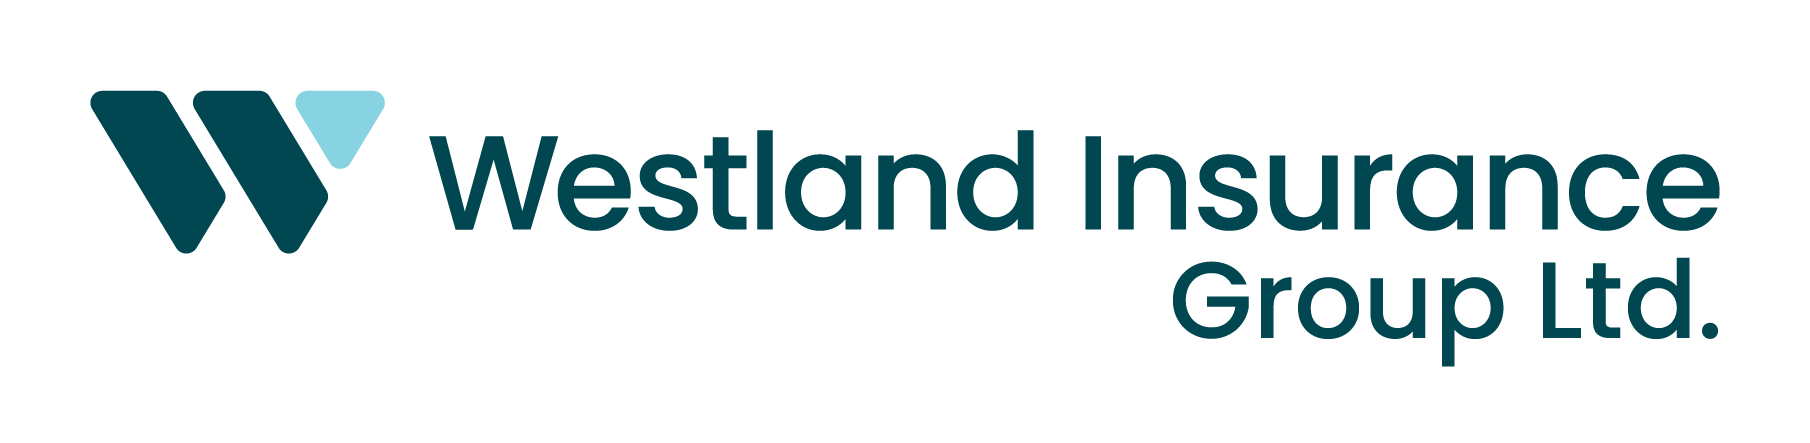 Westland Insurance a